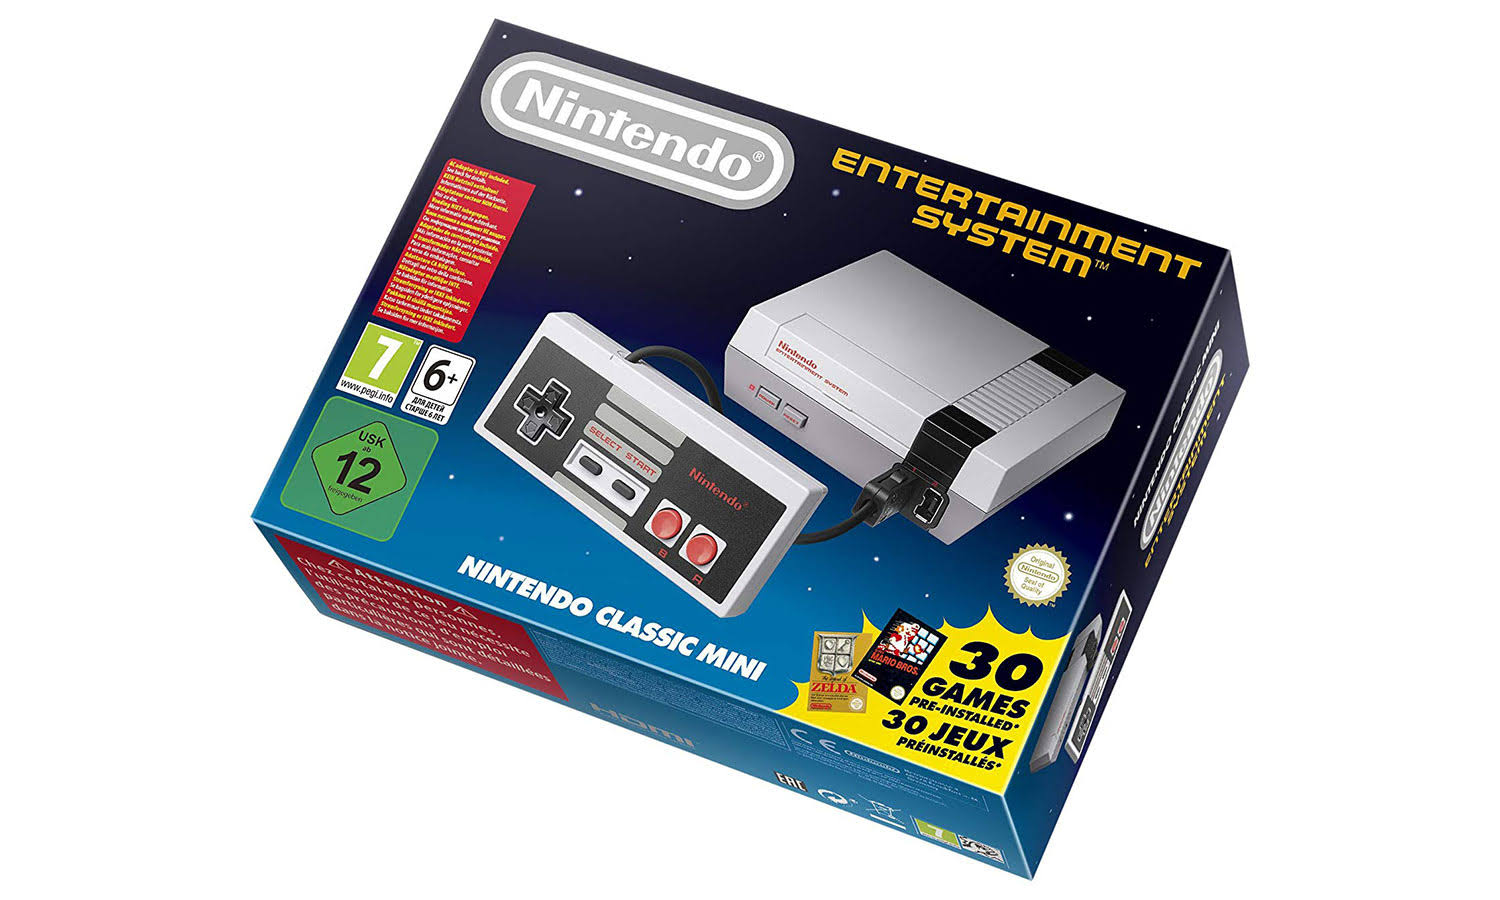 Nintendo Classic Mini Nes System Video Game Console - 30 Games